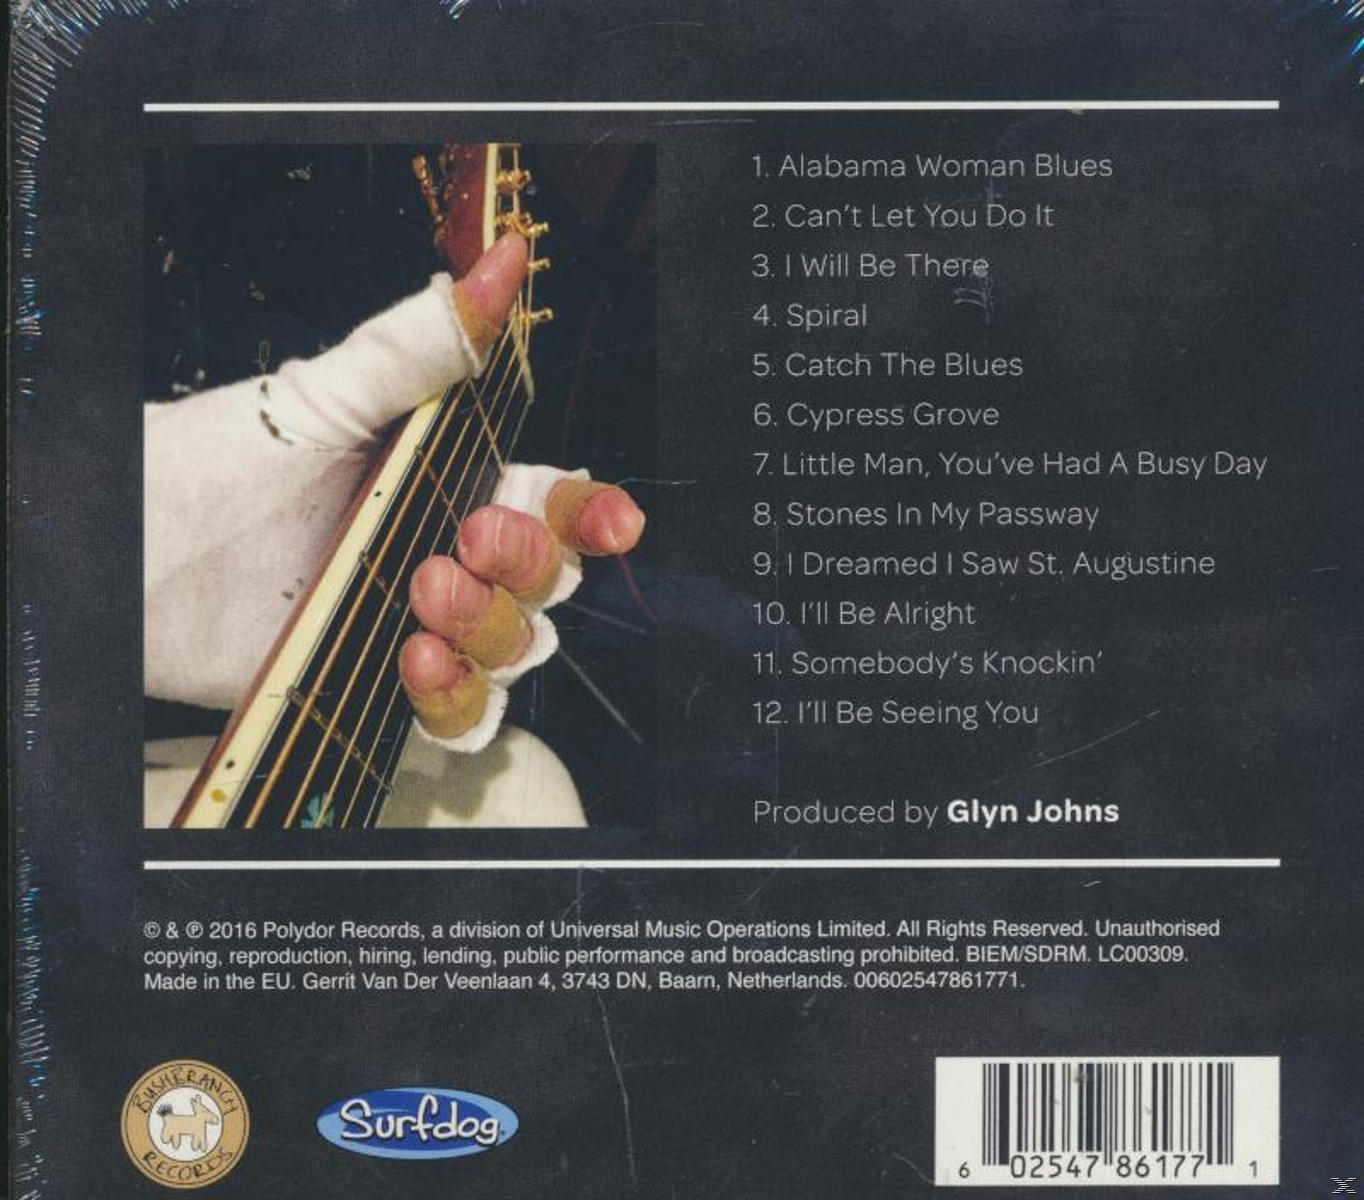 Eric Clapton (CD) Still - - I Do